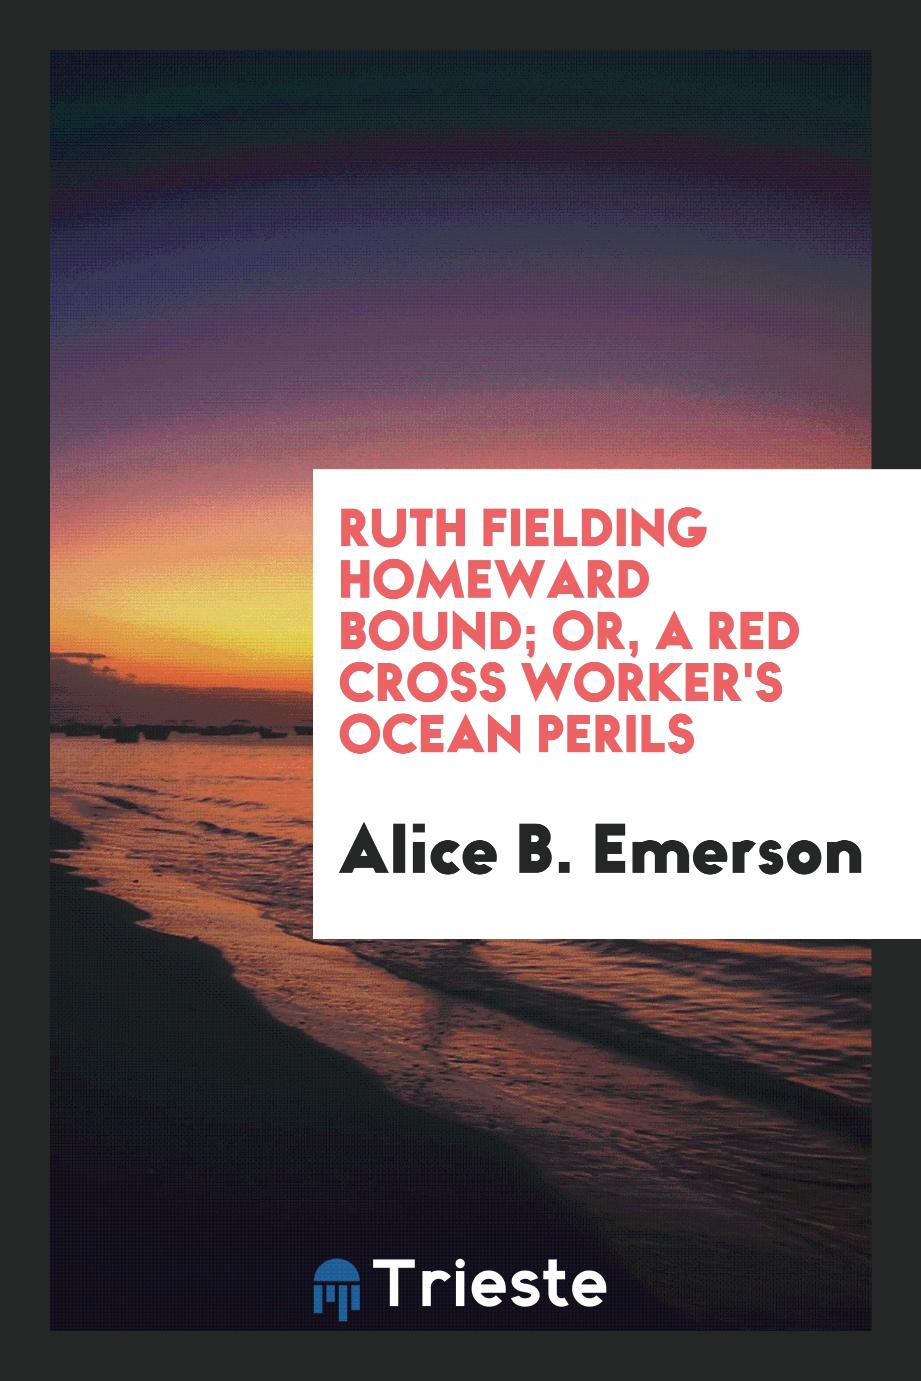 Ruth Fielding Homeward Bound; Or, A Red Cross Worker's Ocean Perils